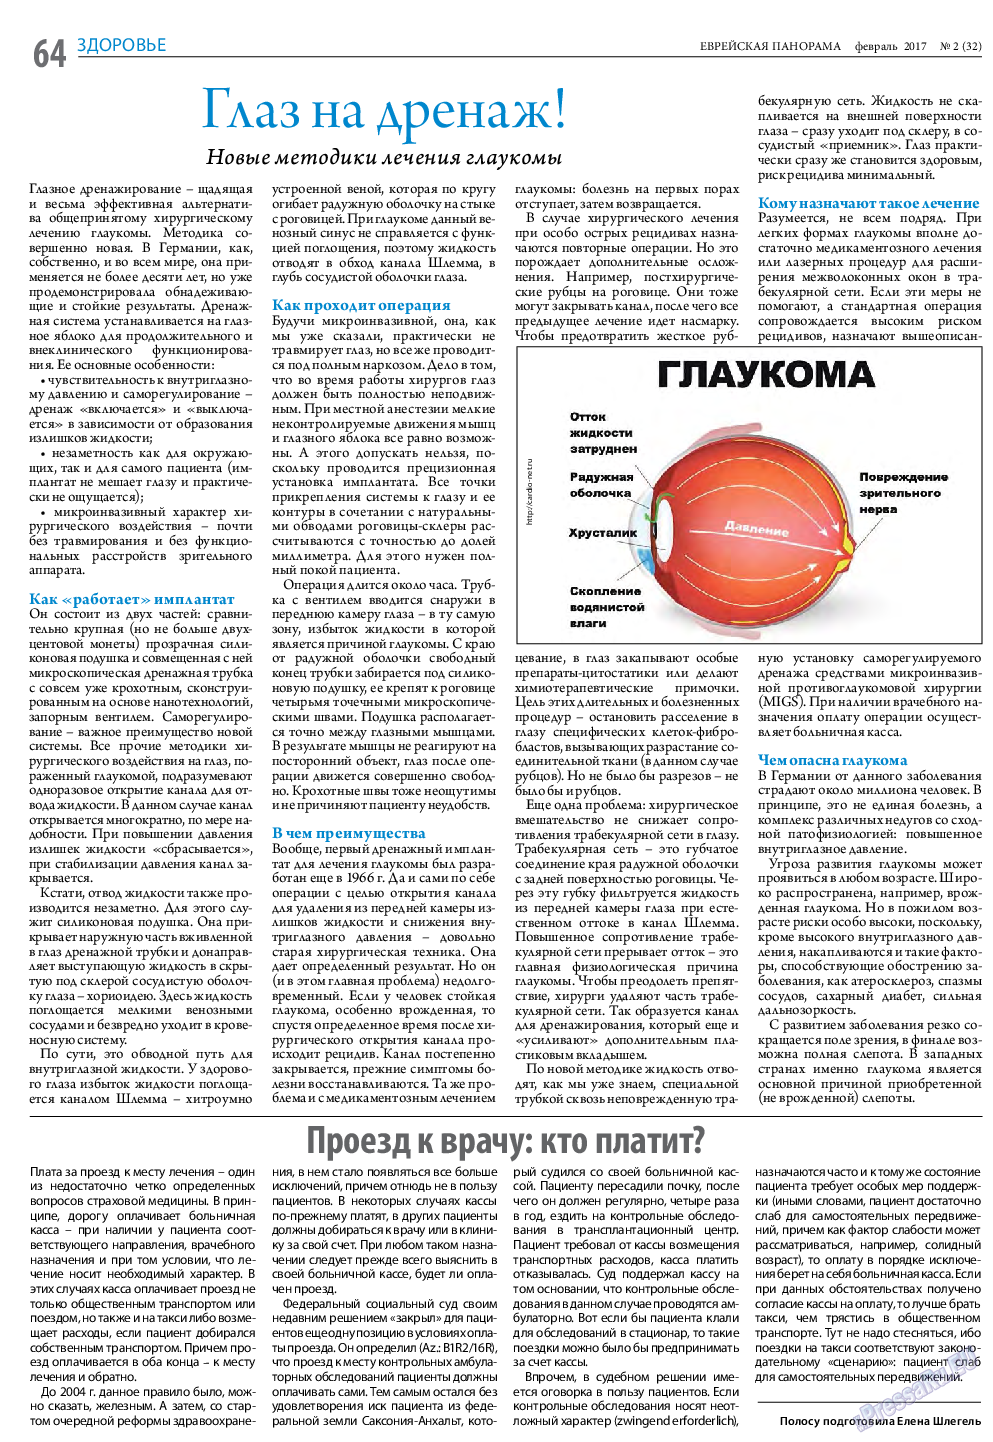 Еврейская панорама, газета. 2017 №2 стр.64